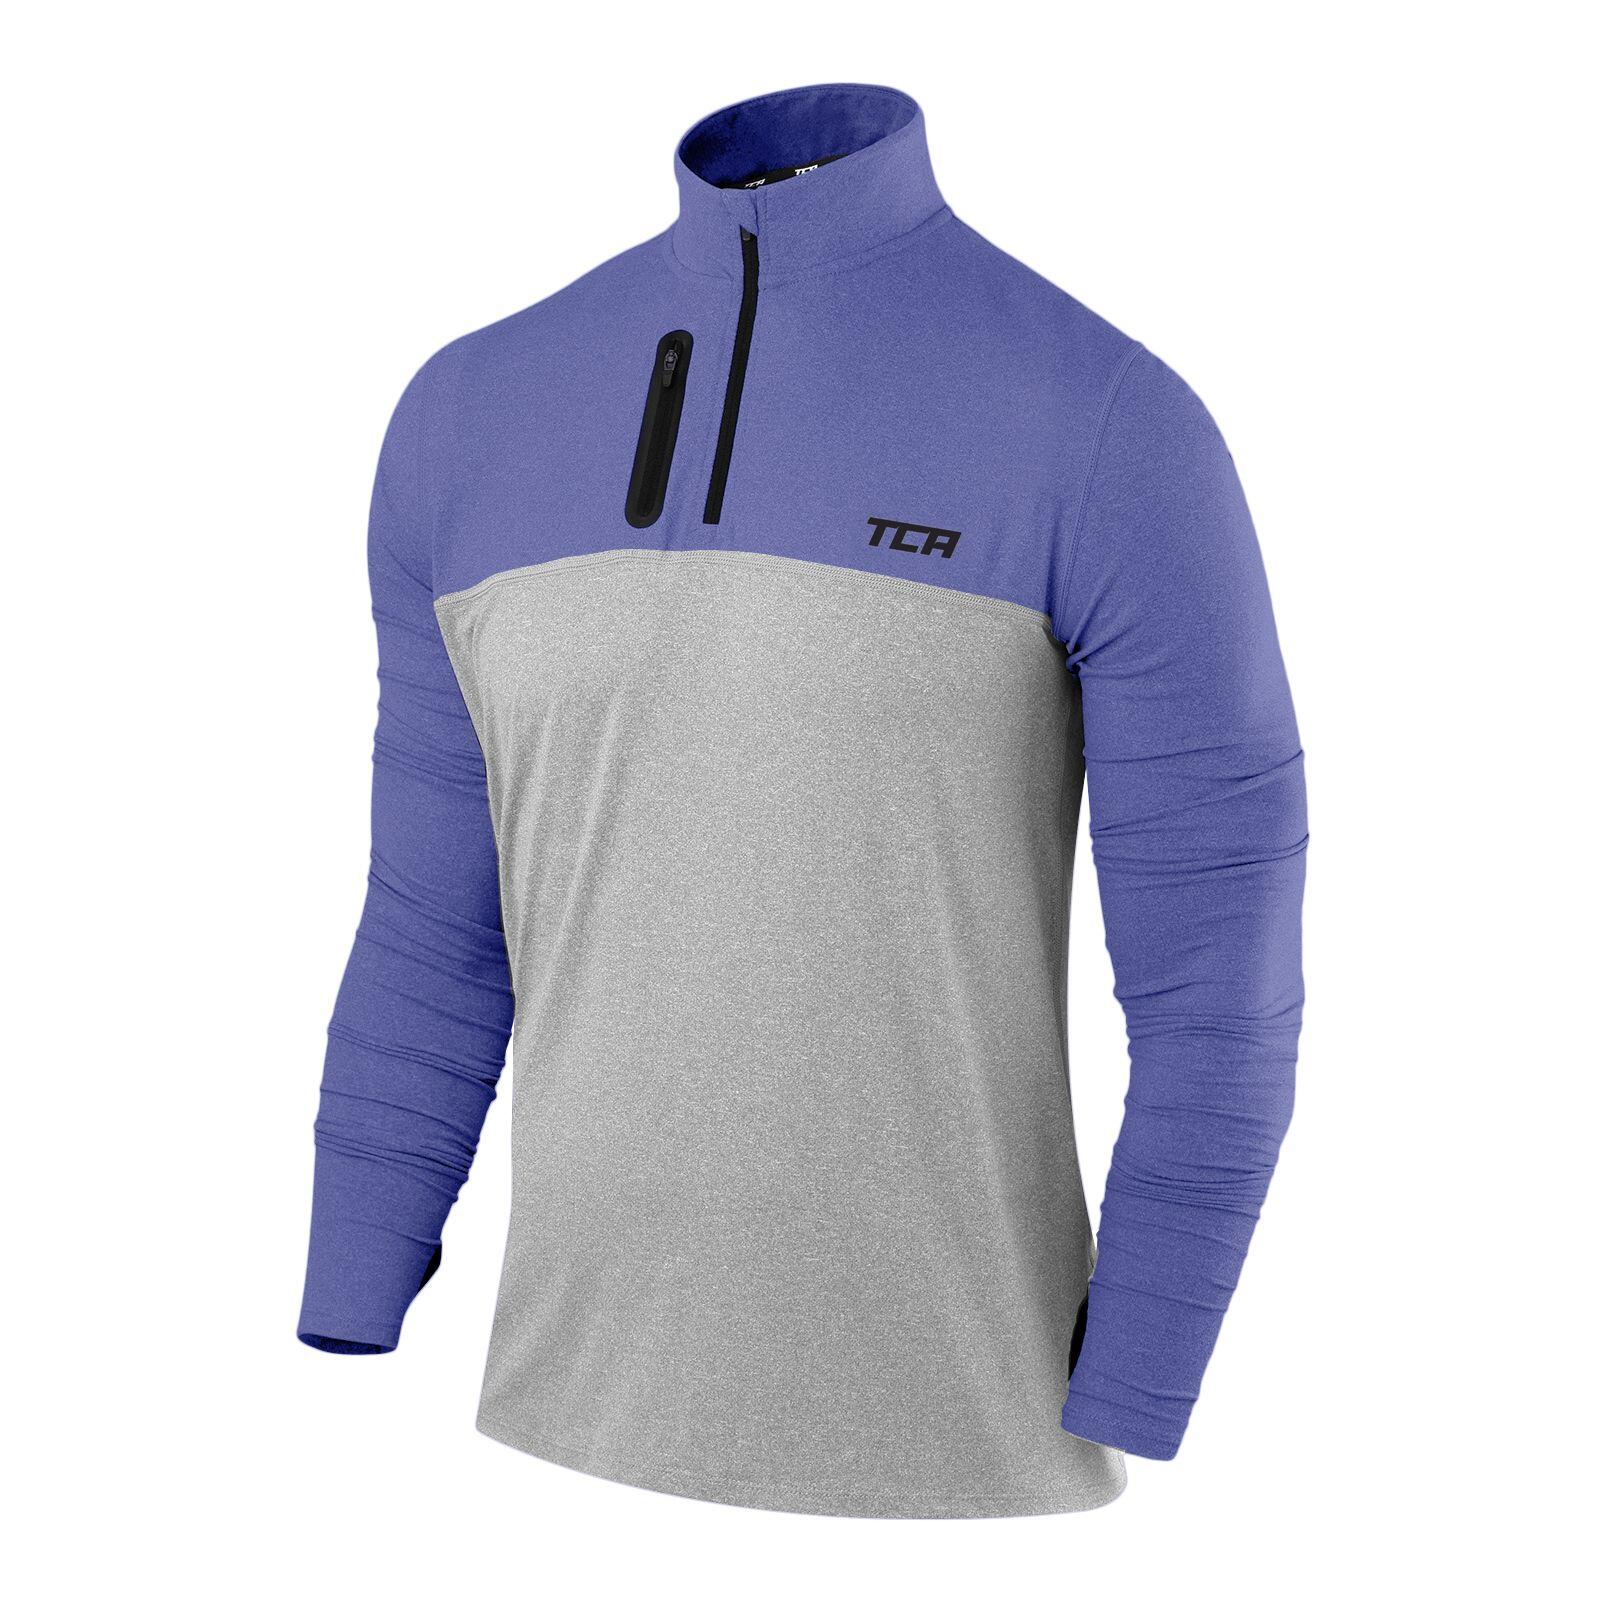 Men's Fusion Long Sleeve Half Zip Running Gym Top - Grey/Dazzling Blue 2/5